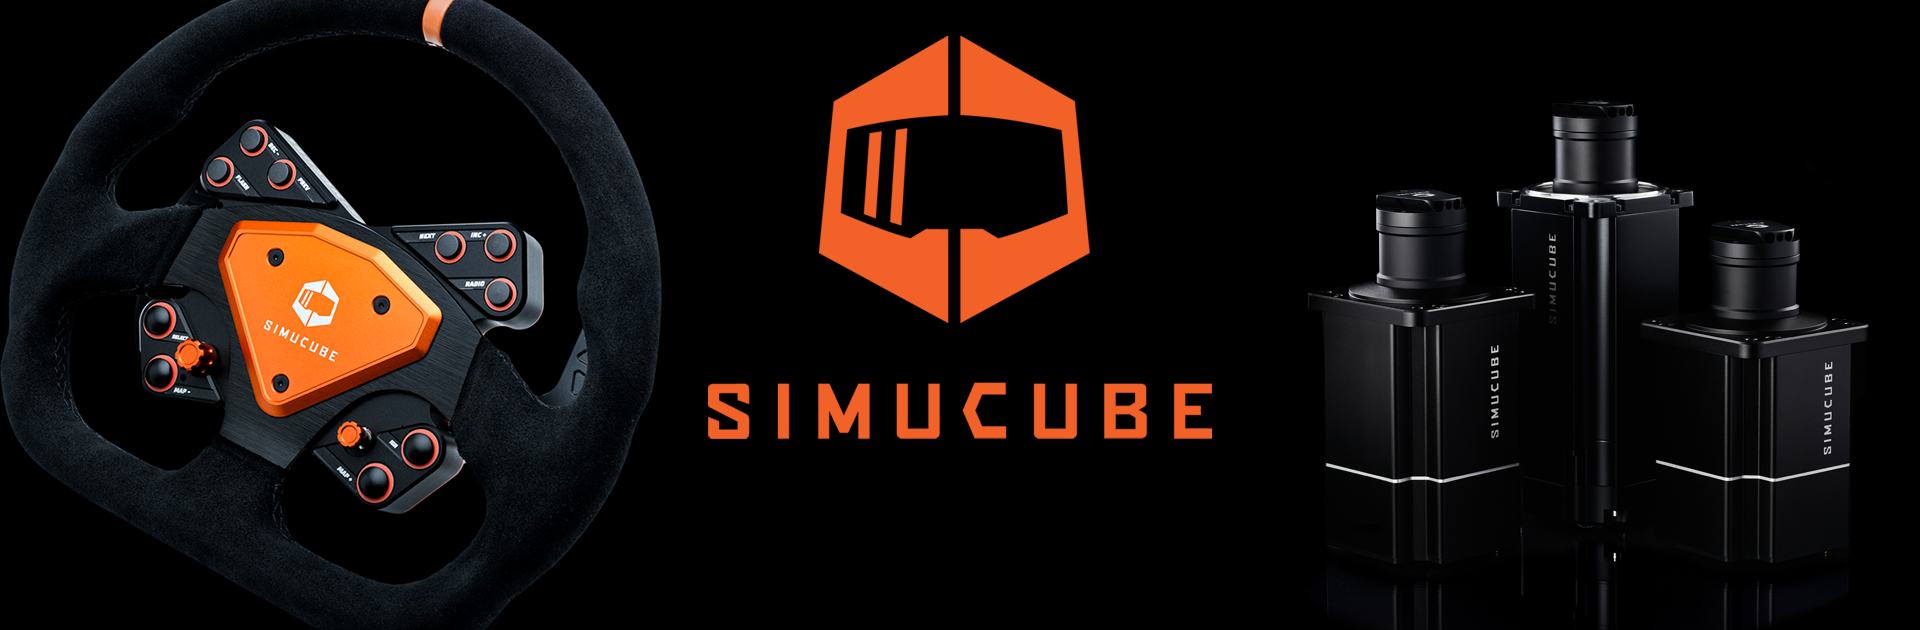 Official Simucube OEM partner